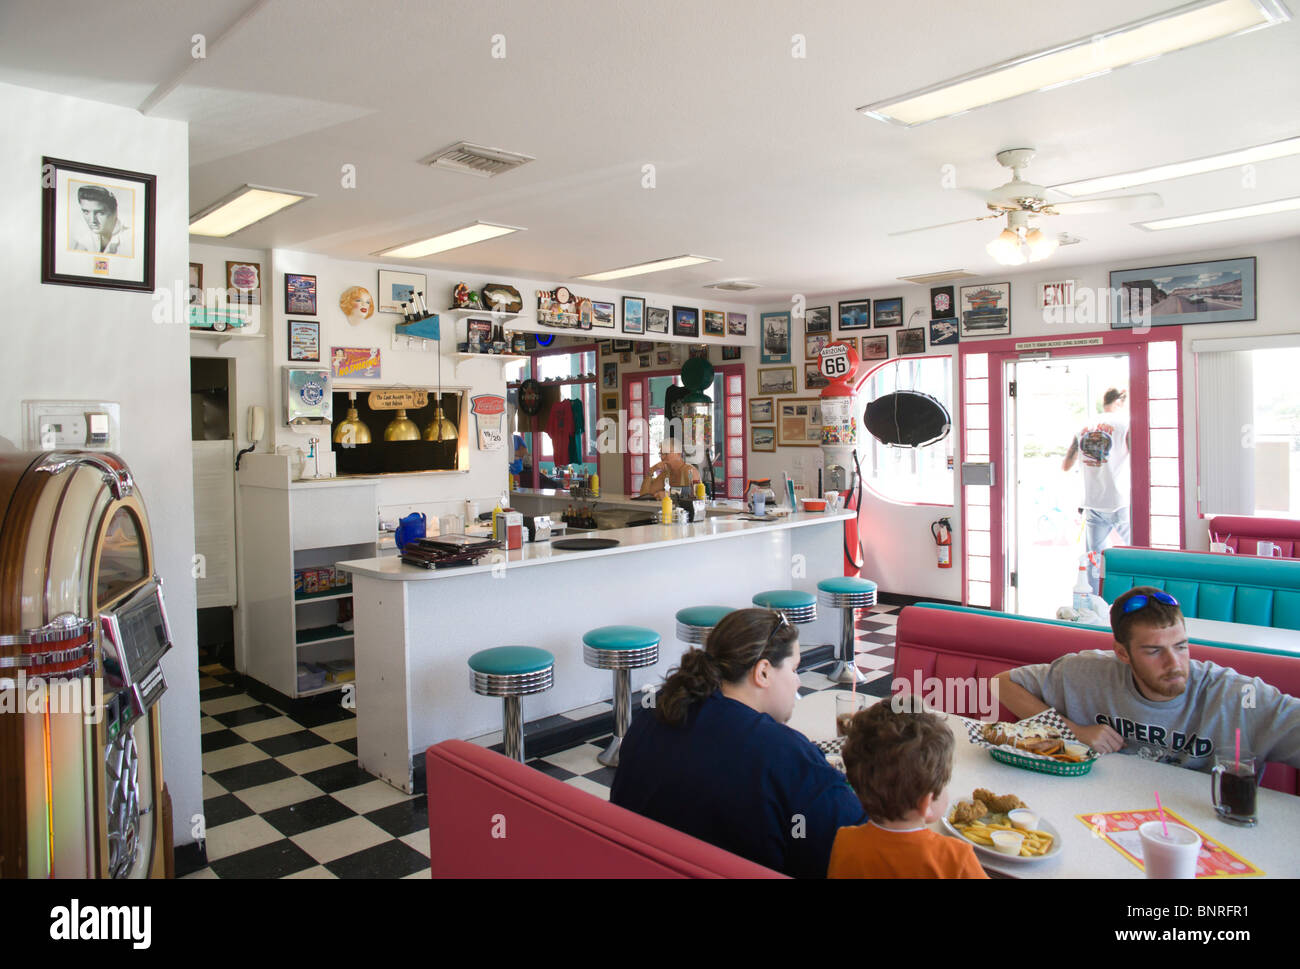 Route 66 road trip Arizona - Kingman AZ historic town - Mr D'z roadside 1950s style diner interior Stock Photo